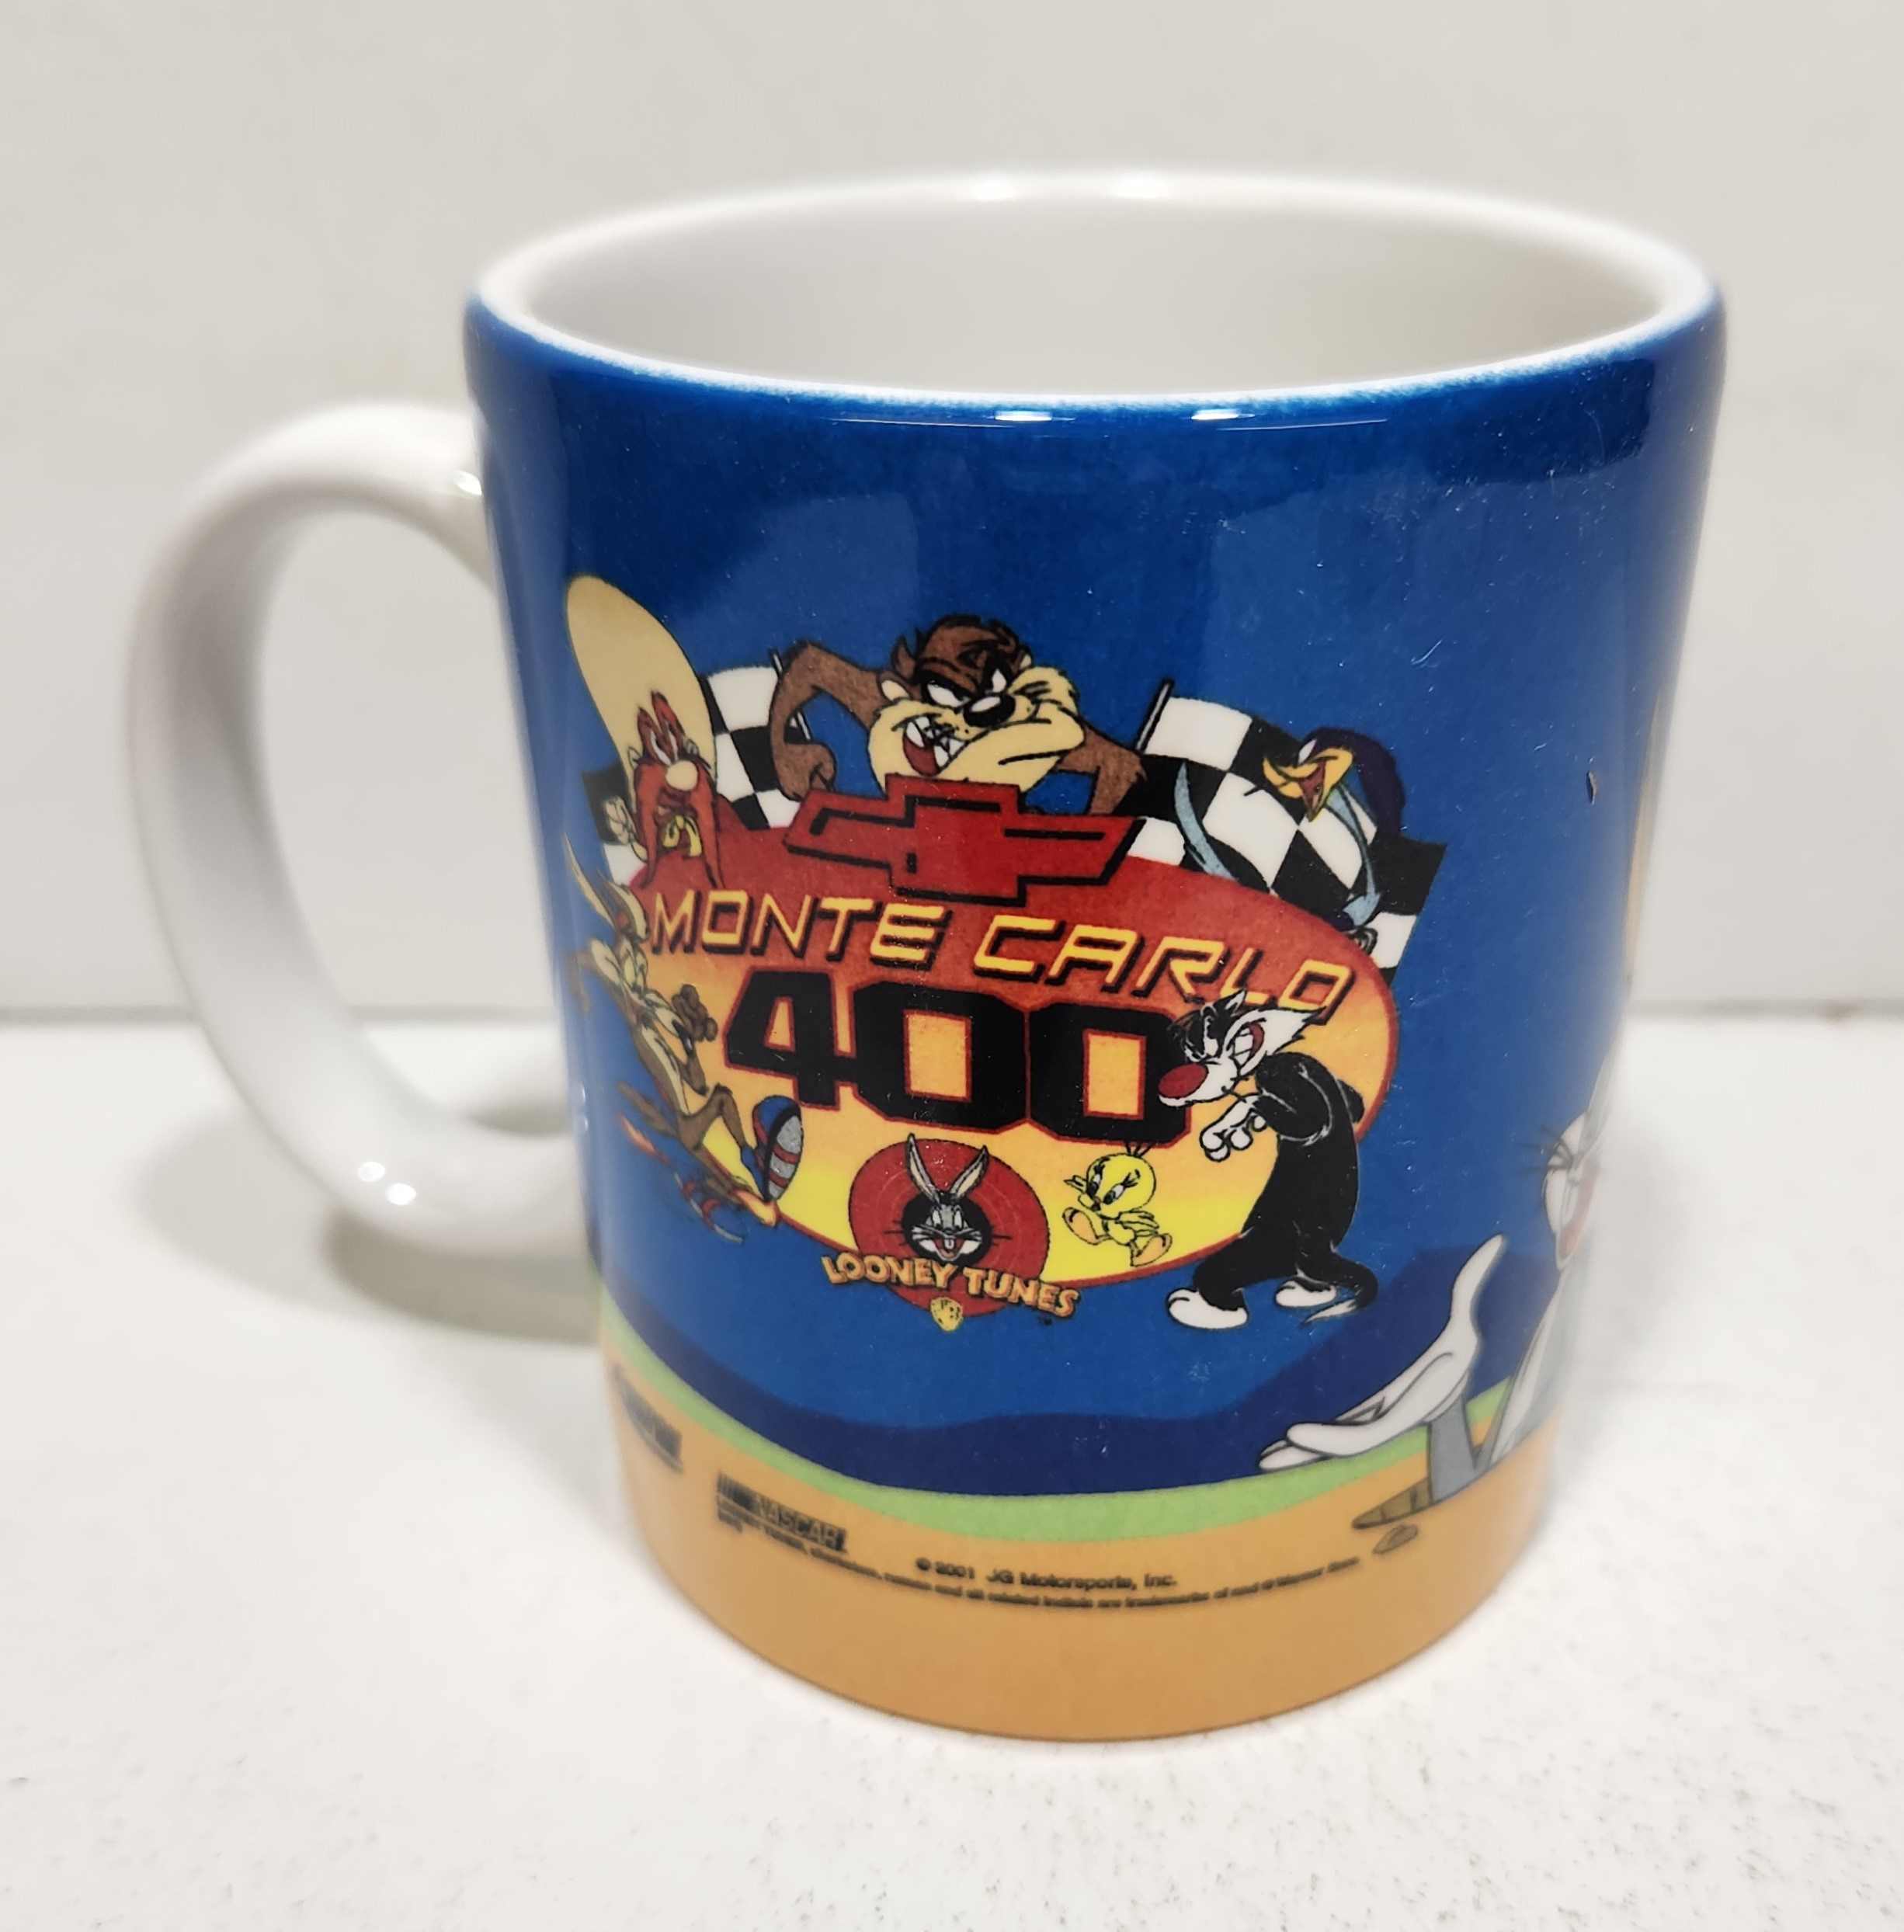 2001 Jeff Gordon Dupont "Looney Tunes" collectors mug